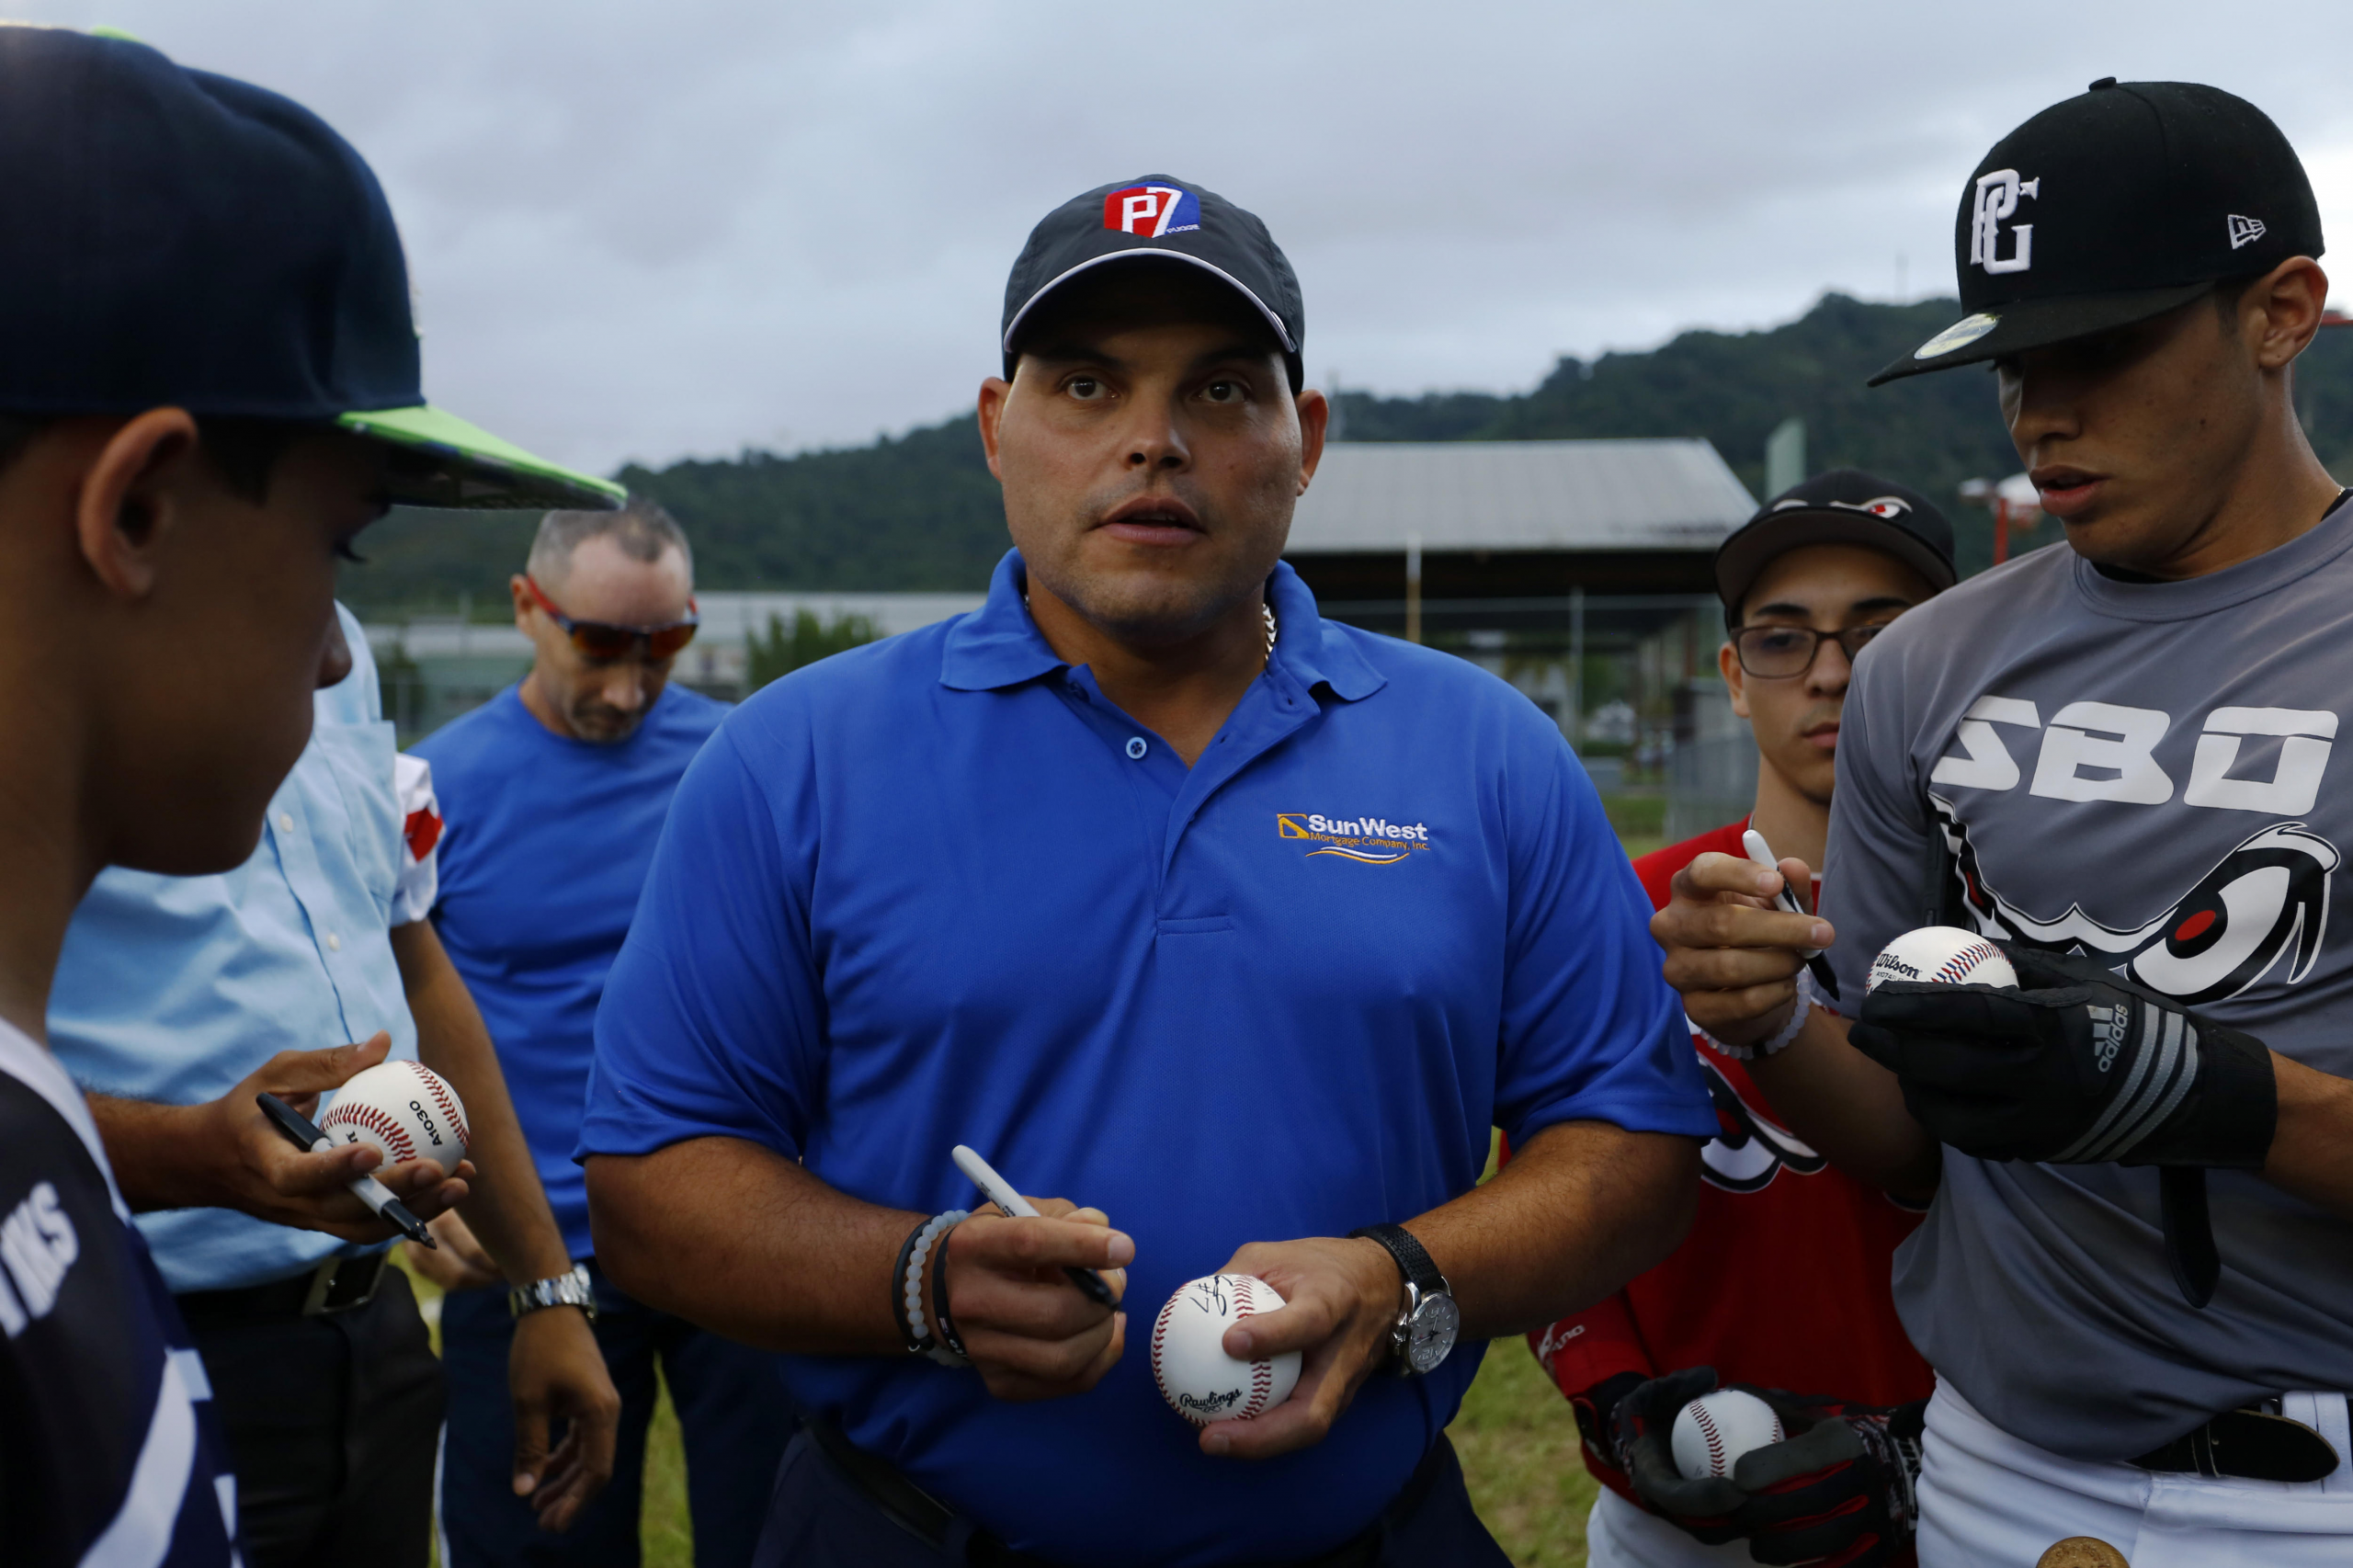 wp image 6052 scaled - Secretario de Deportes de P.Rico recibe a beisbolista boricua Iván Rodríguez